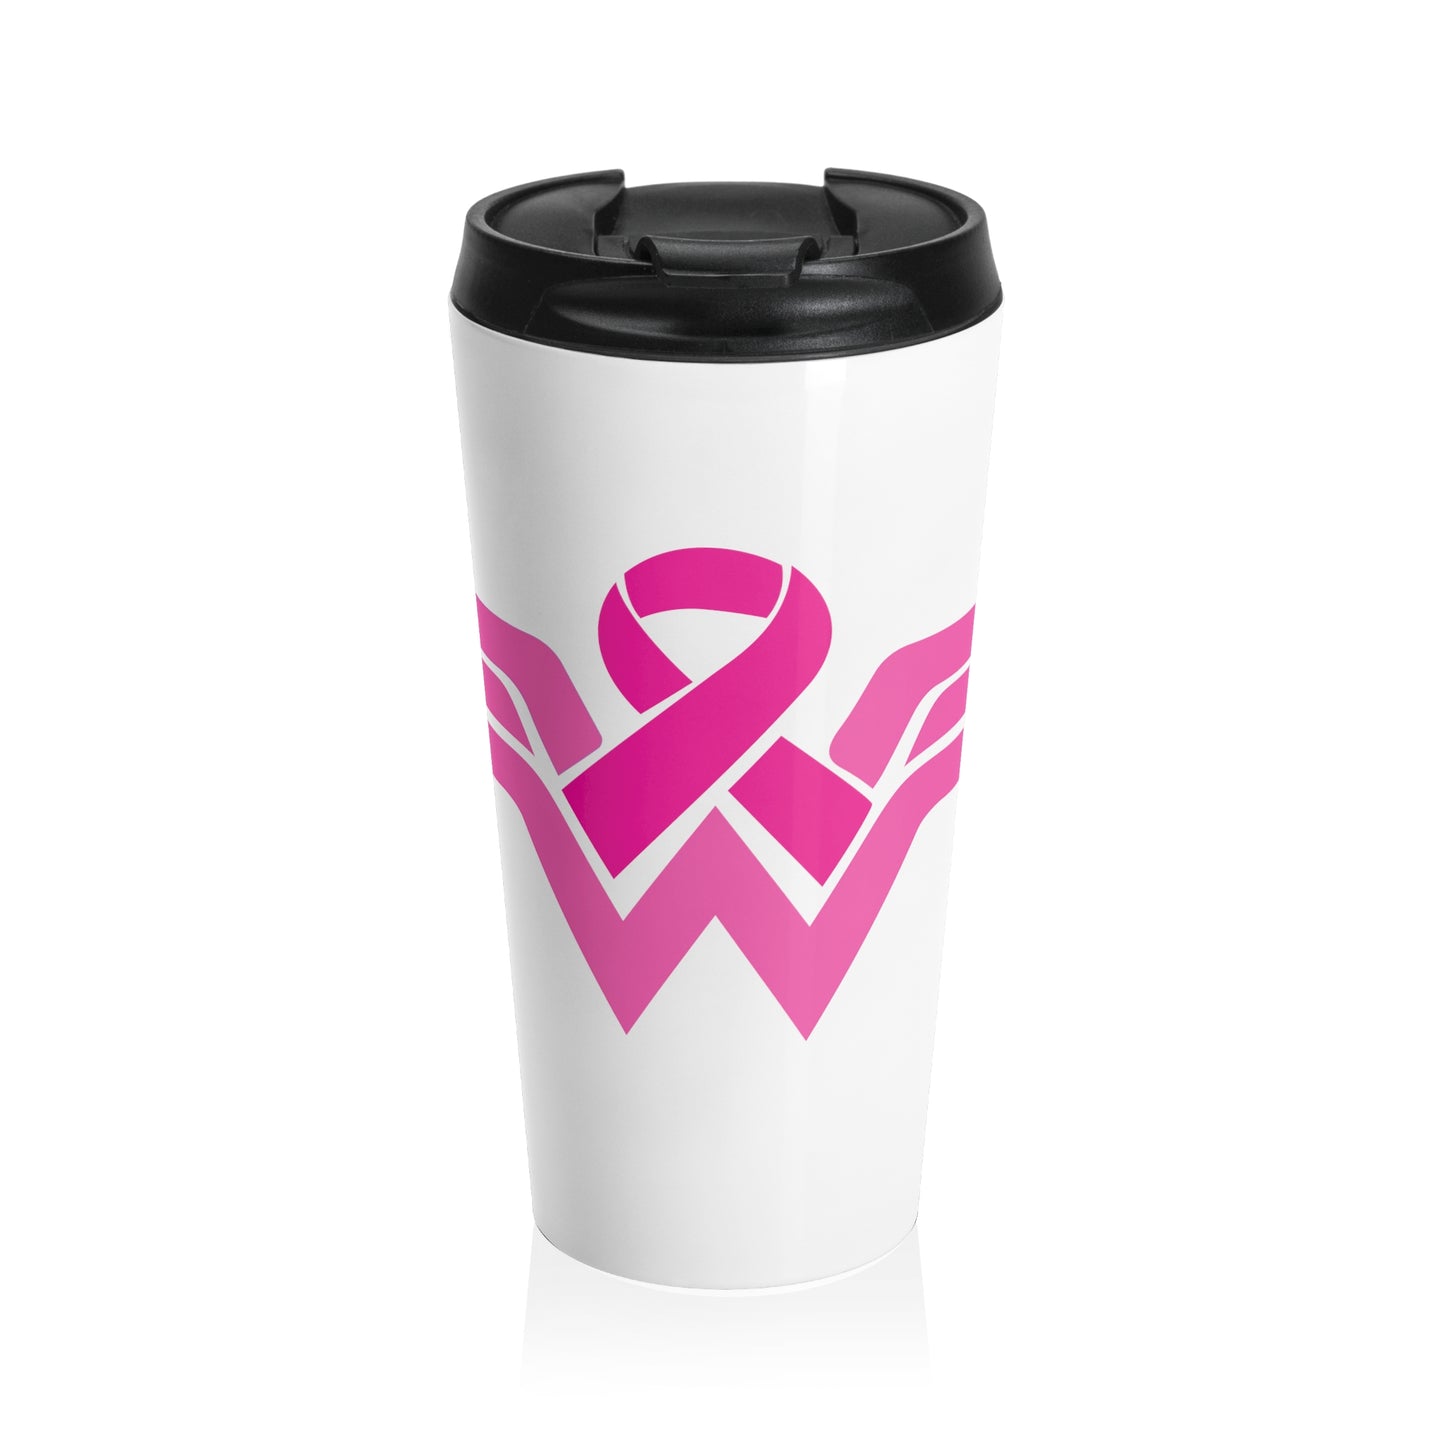 Wonder Woman Travel Mug